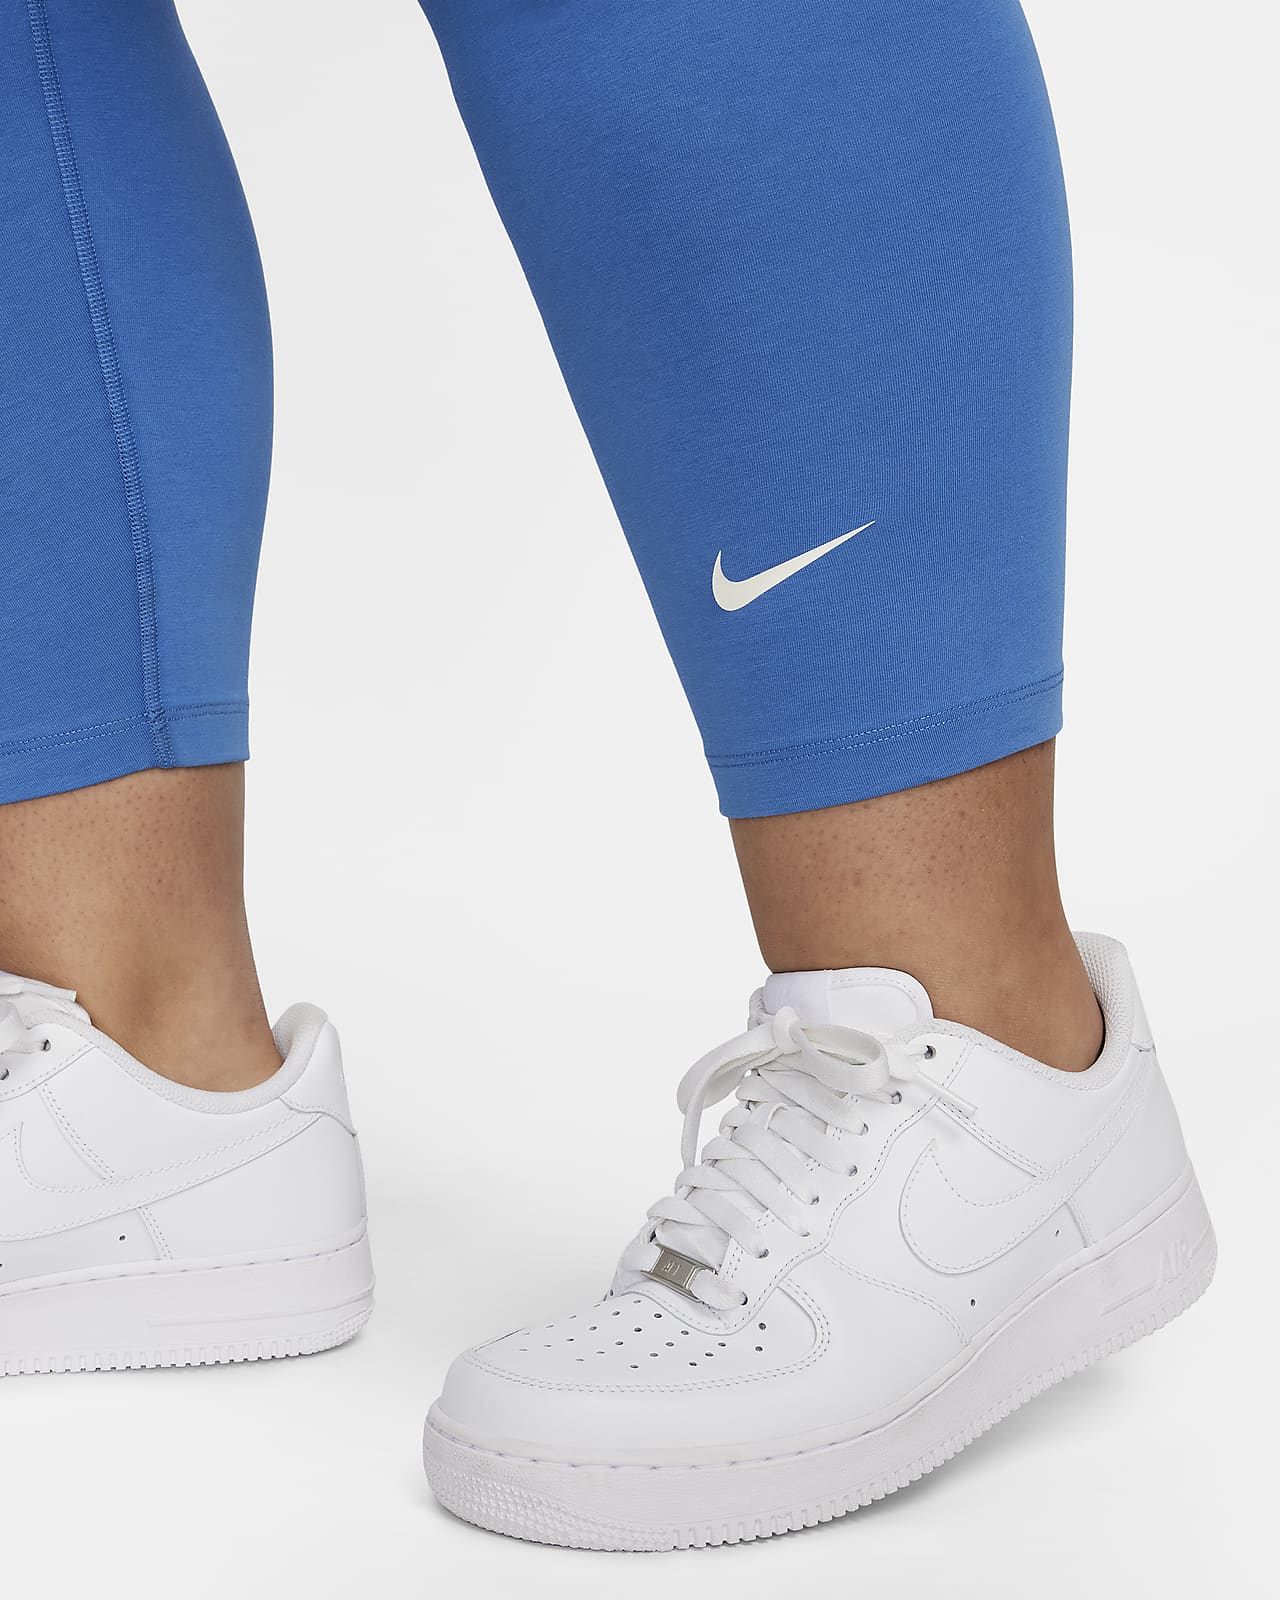 Nike Pro Dri-FIT Women's High-Waisted 7/8 Printed Leggings – TPlus